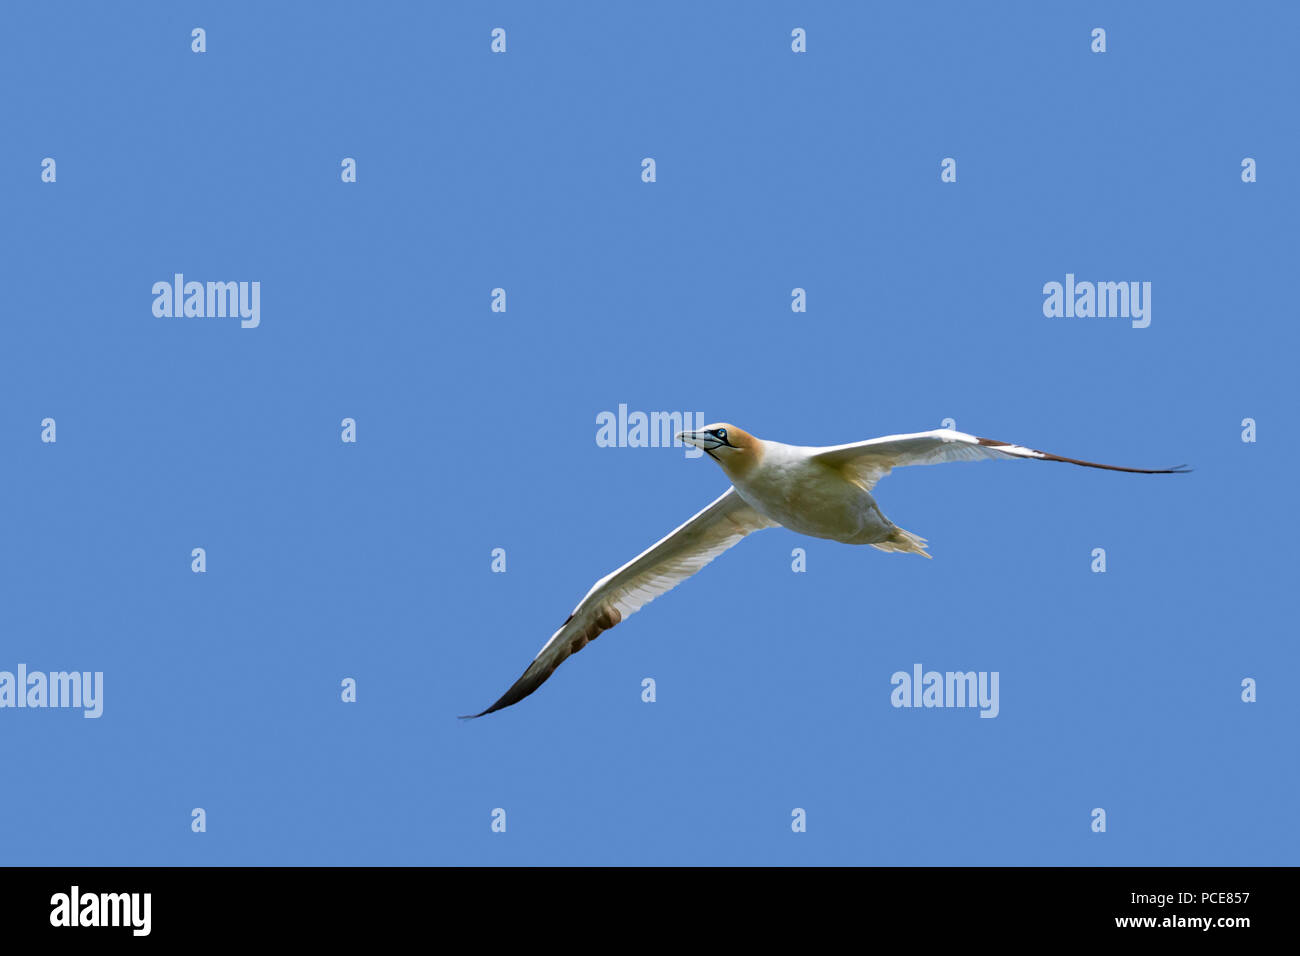 Northern gannet (Morus bassanus) in flight against blue sky Stock Photo